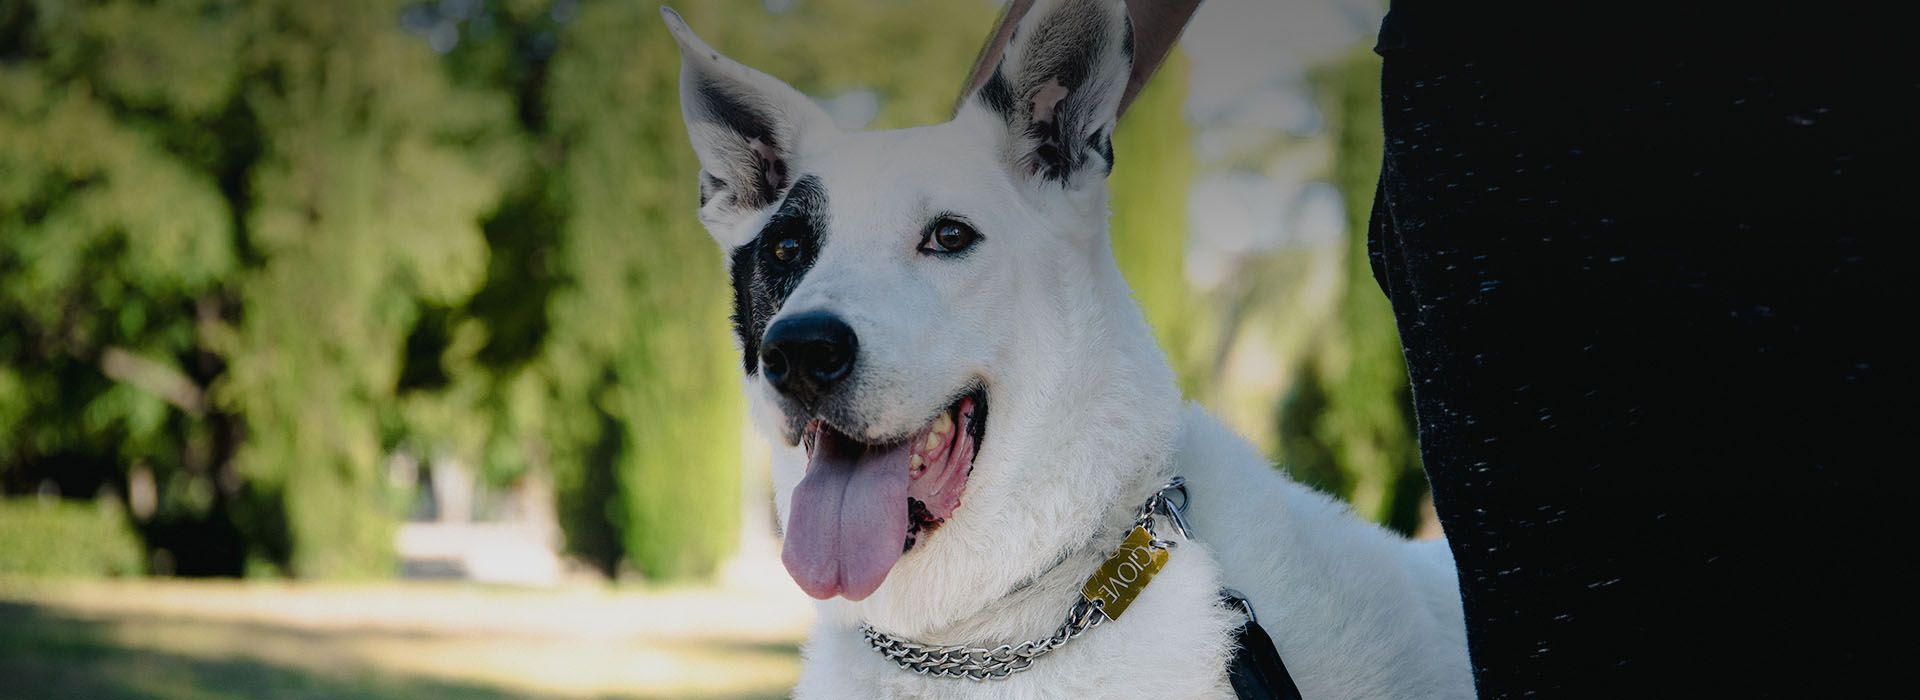 white dog with black spot one eye